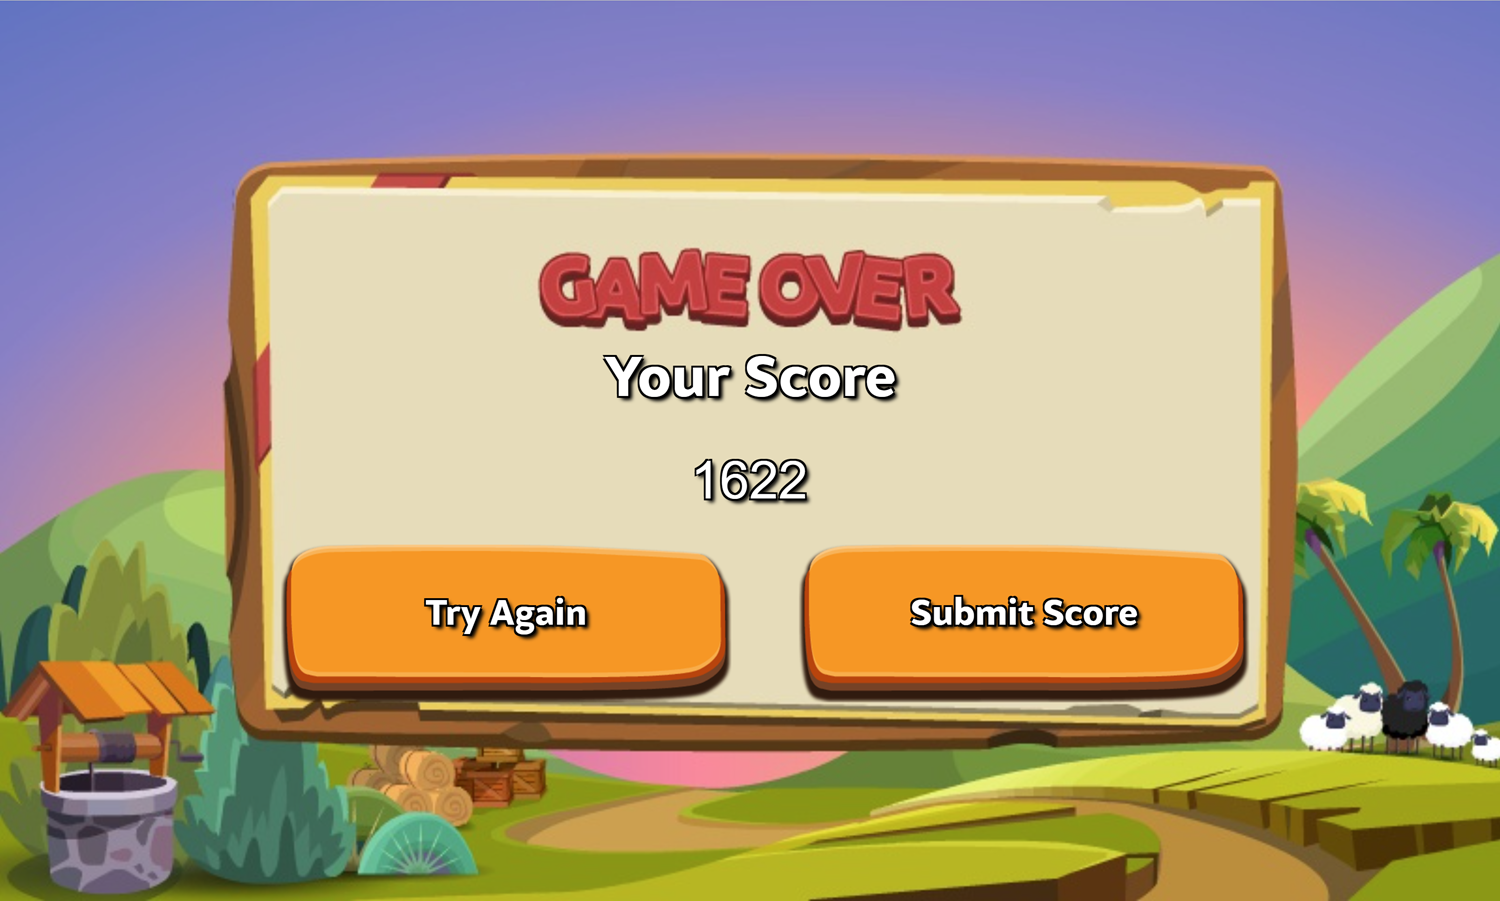 Tripeaks Farm Solitaire Game Over Screen Screenshot.